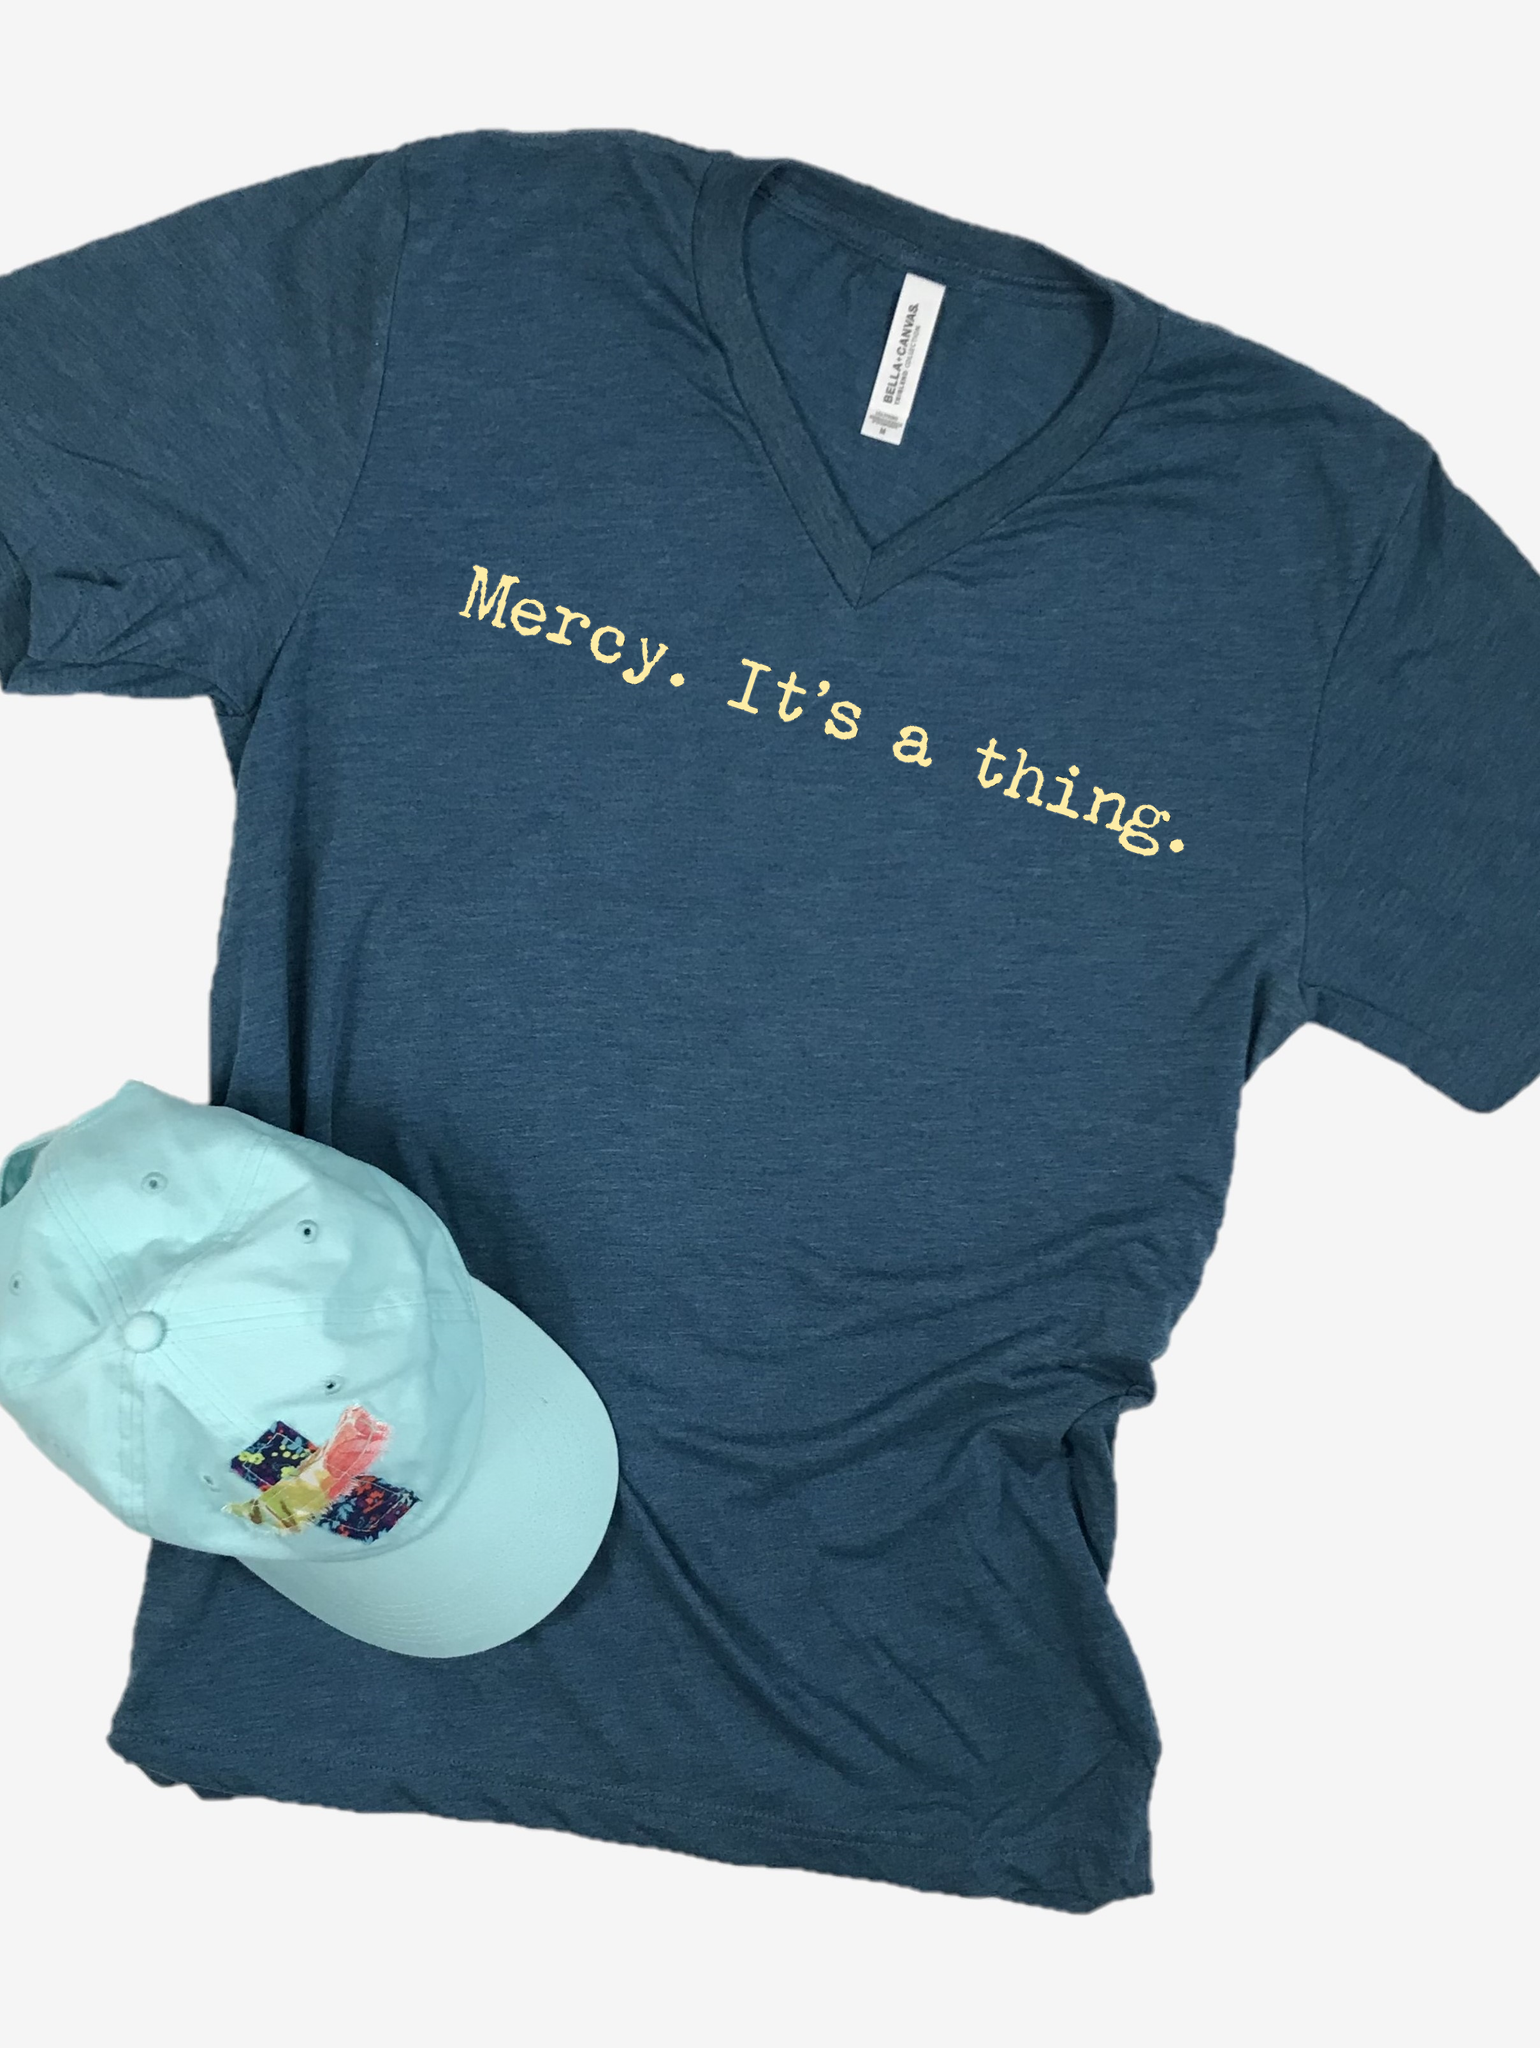 "Mercy. It's a thing." Short Sleeve Tee Shirt, V-Neck, Steel Blue Tri-Blend